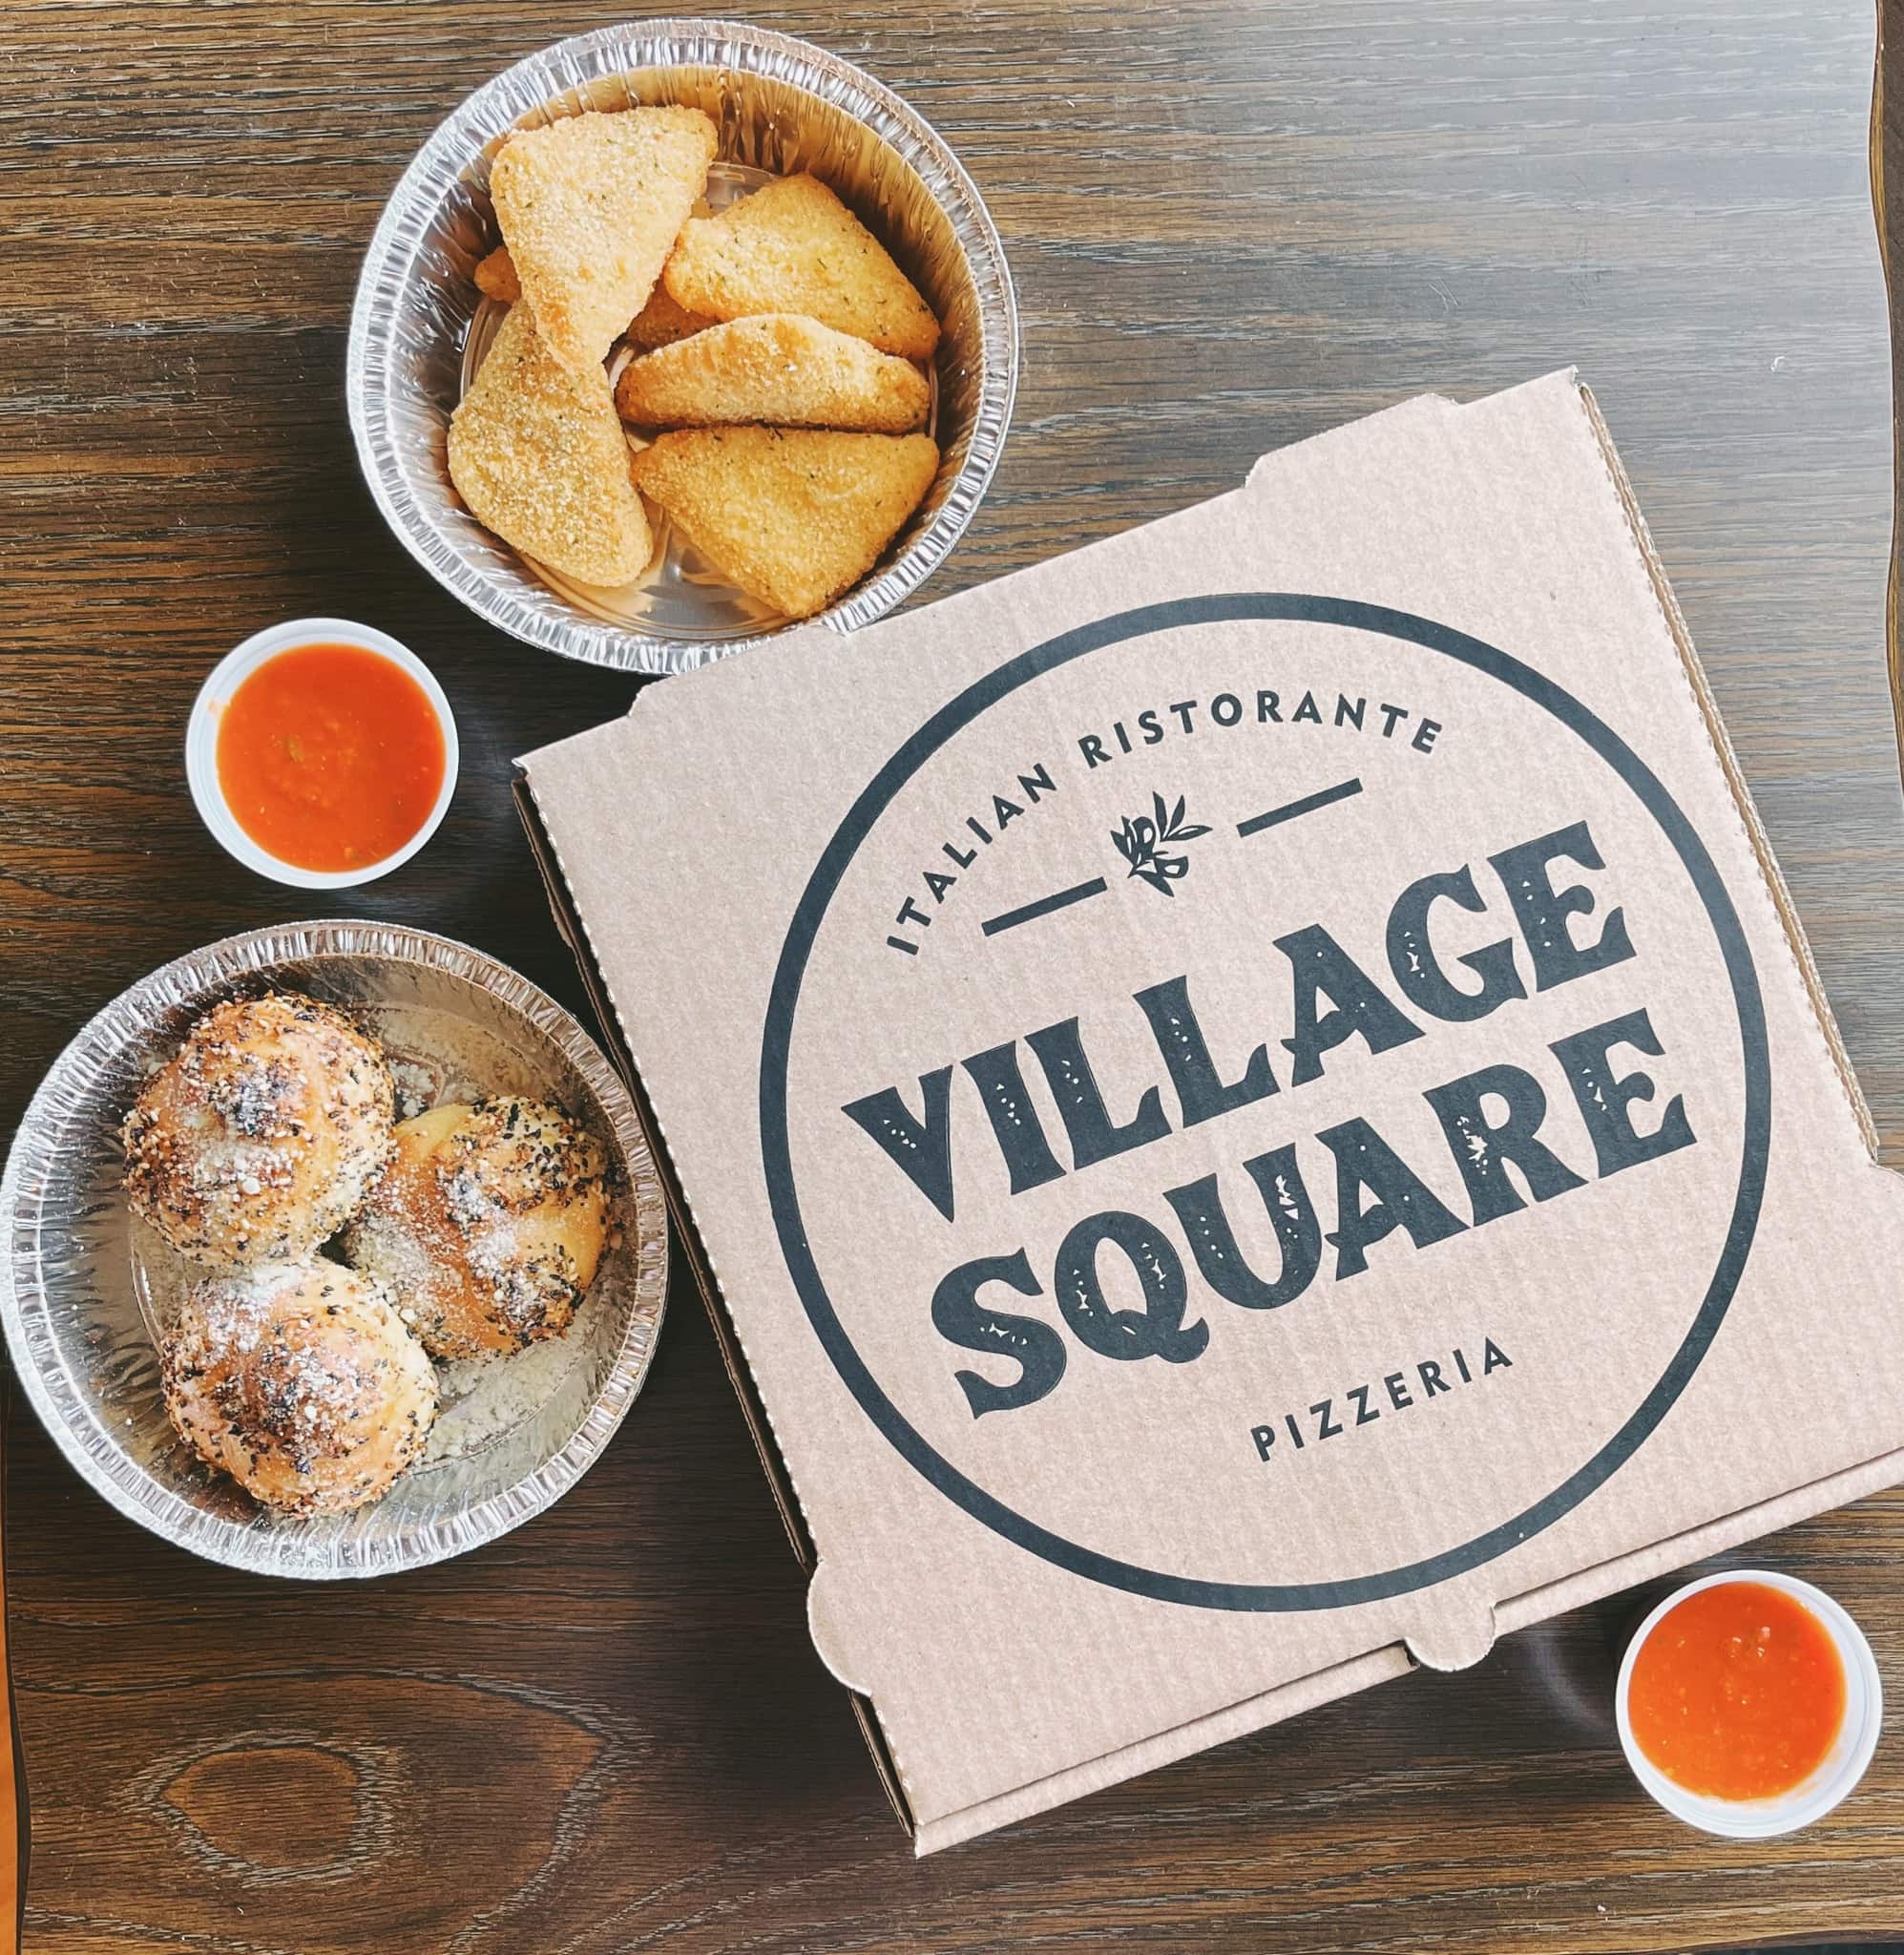 degaetano’s village square pizza